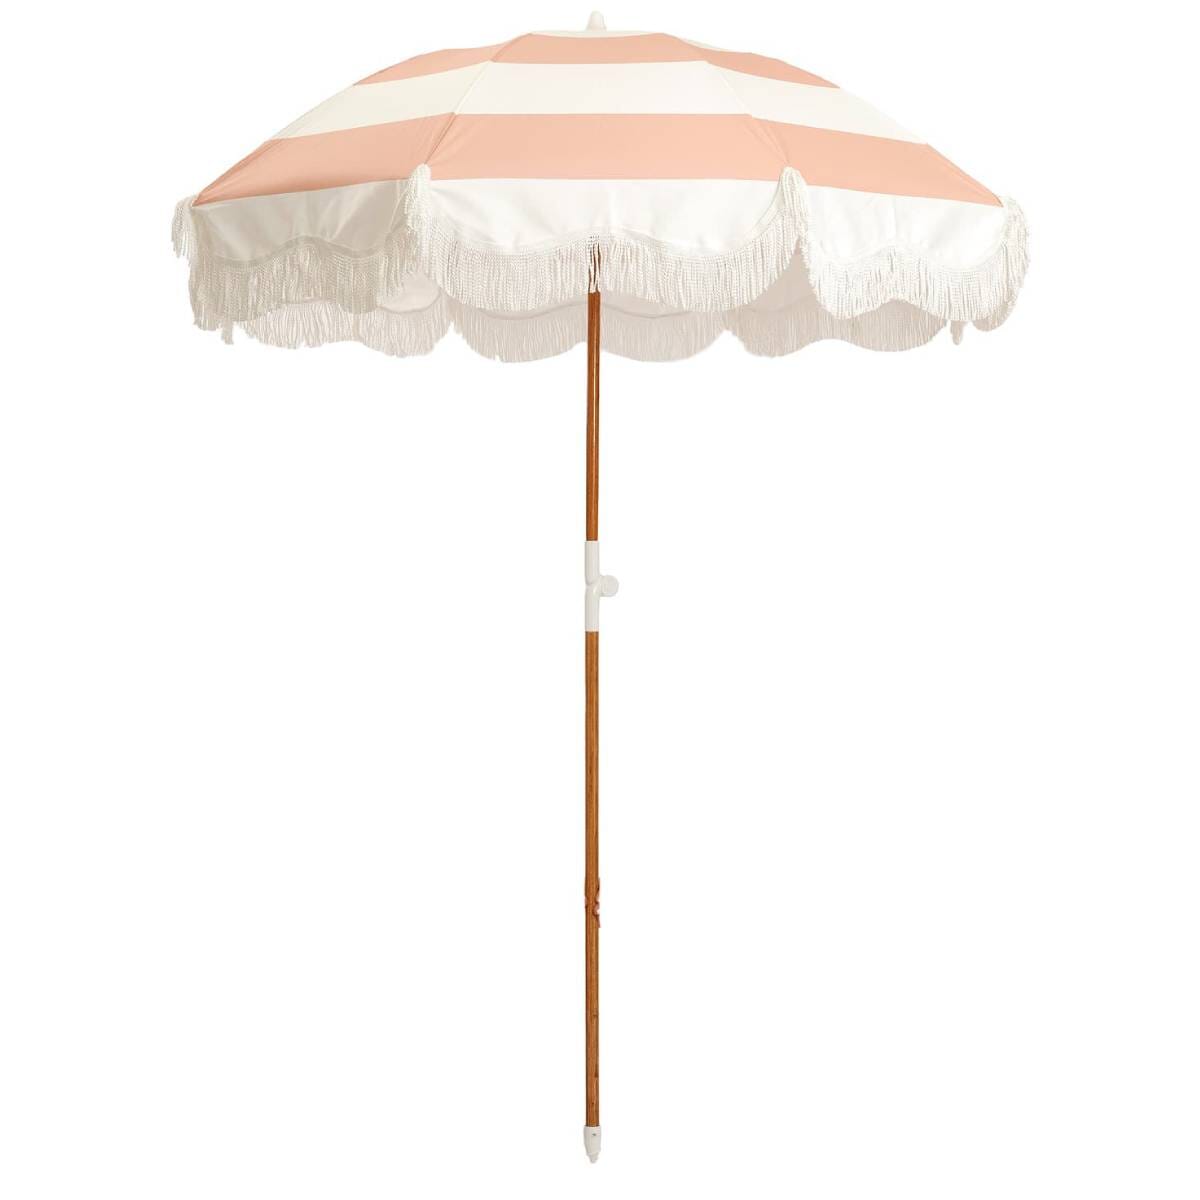 studio image of pink holiday umbrella